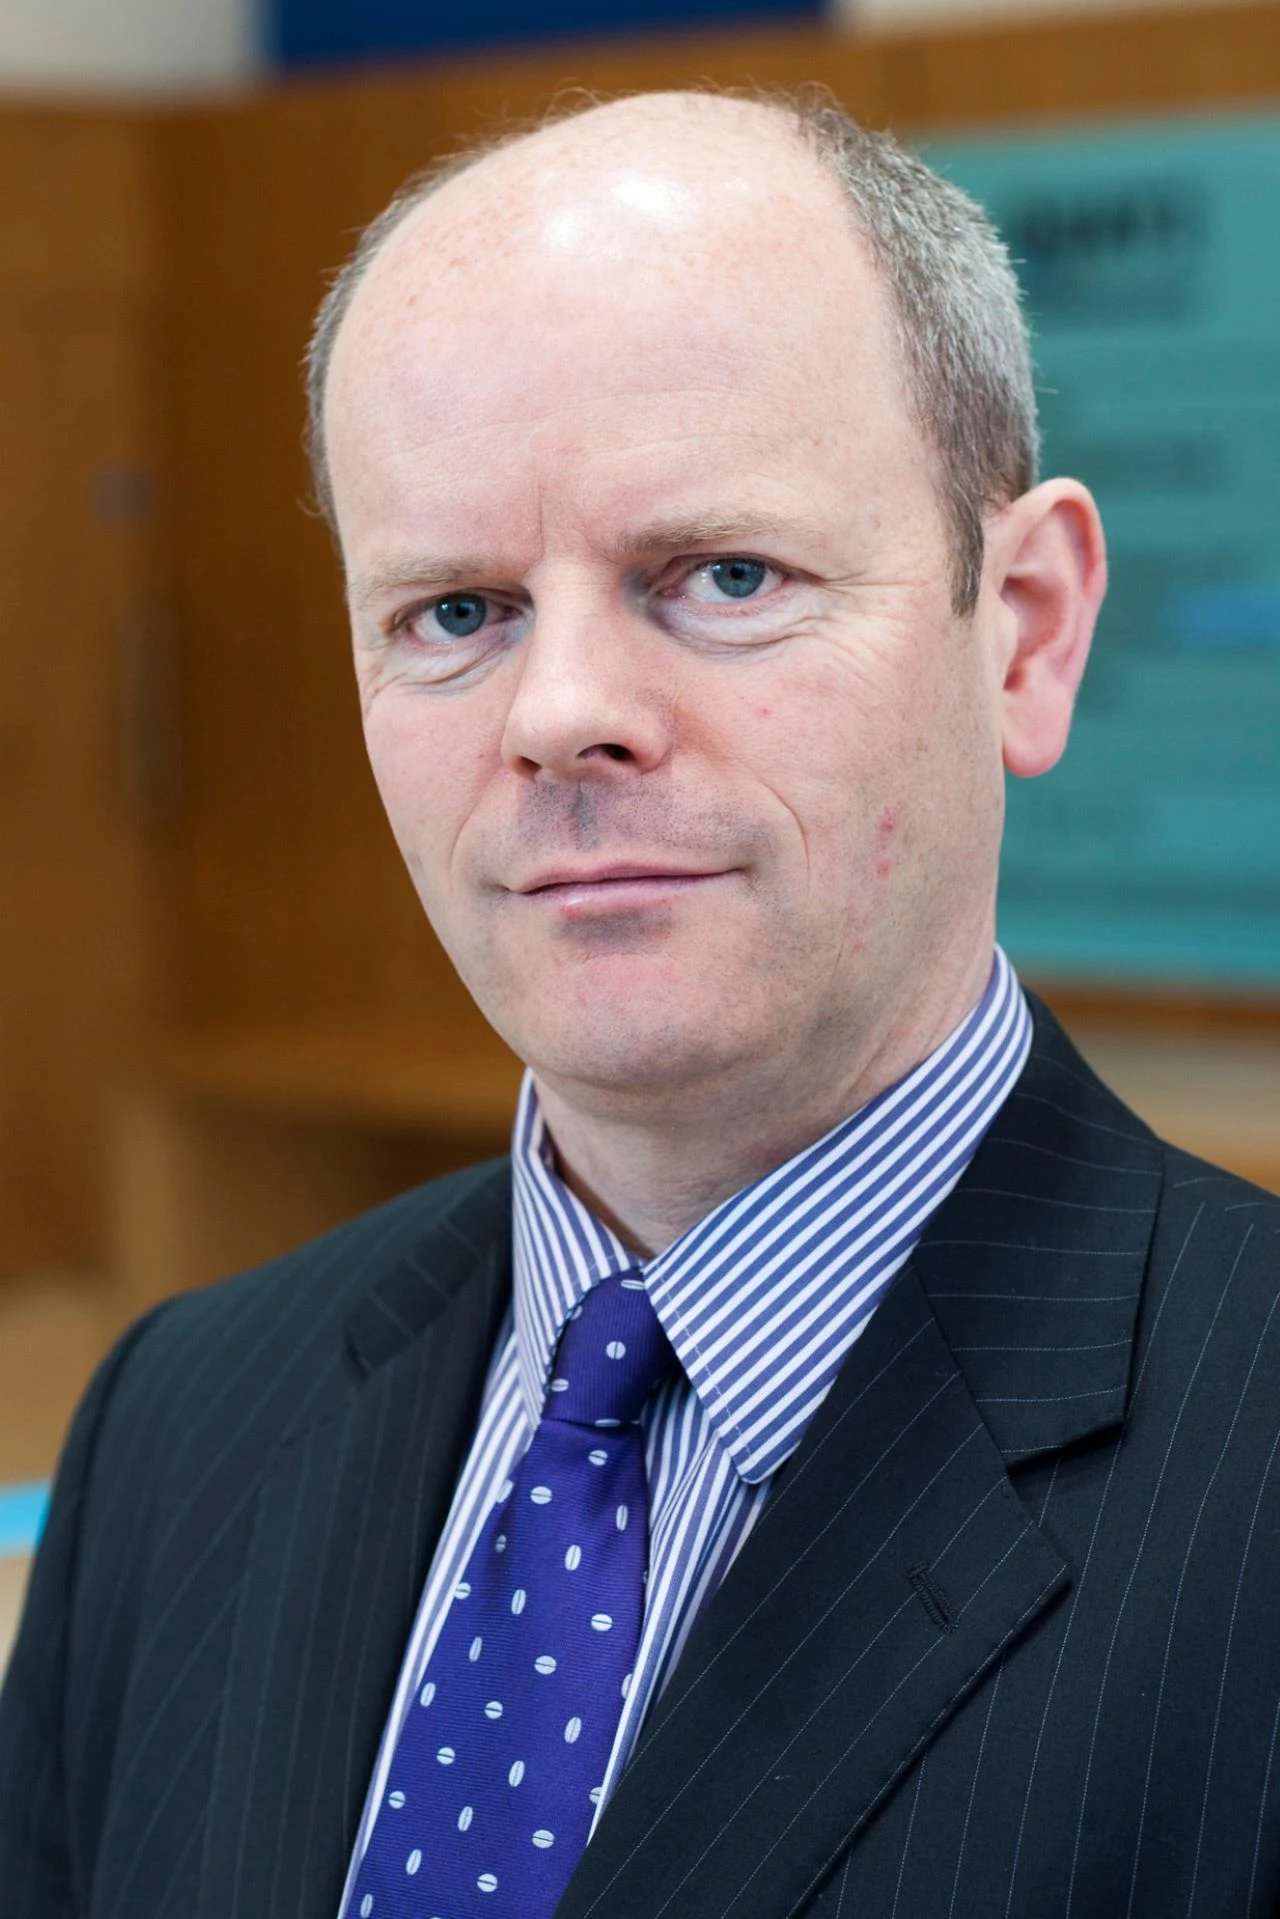 Ken Pattullo, managing partner for Begbies Traynor in Scotland